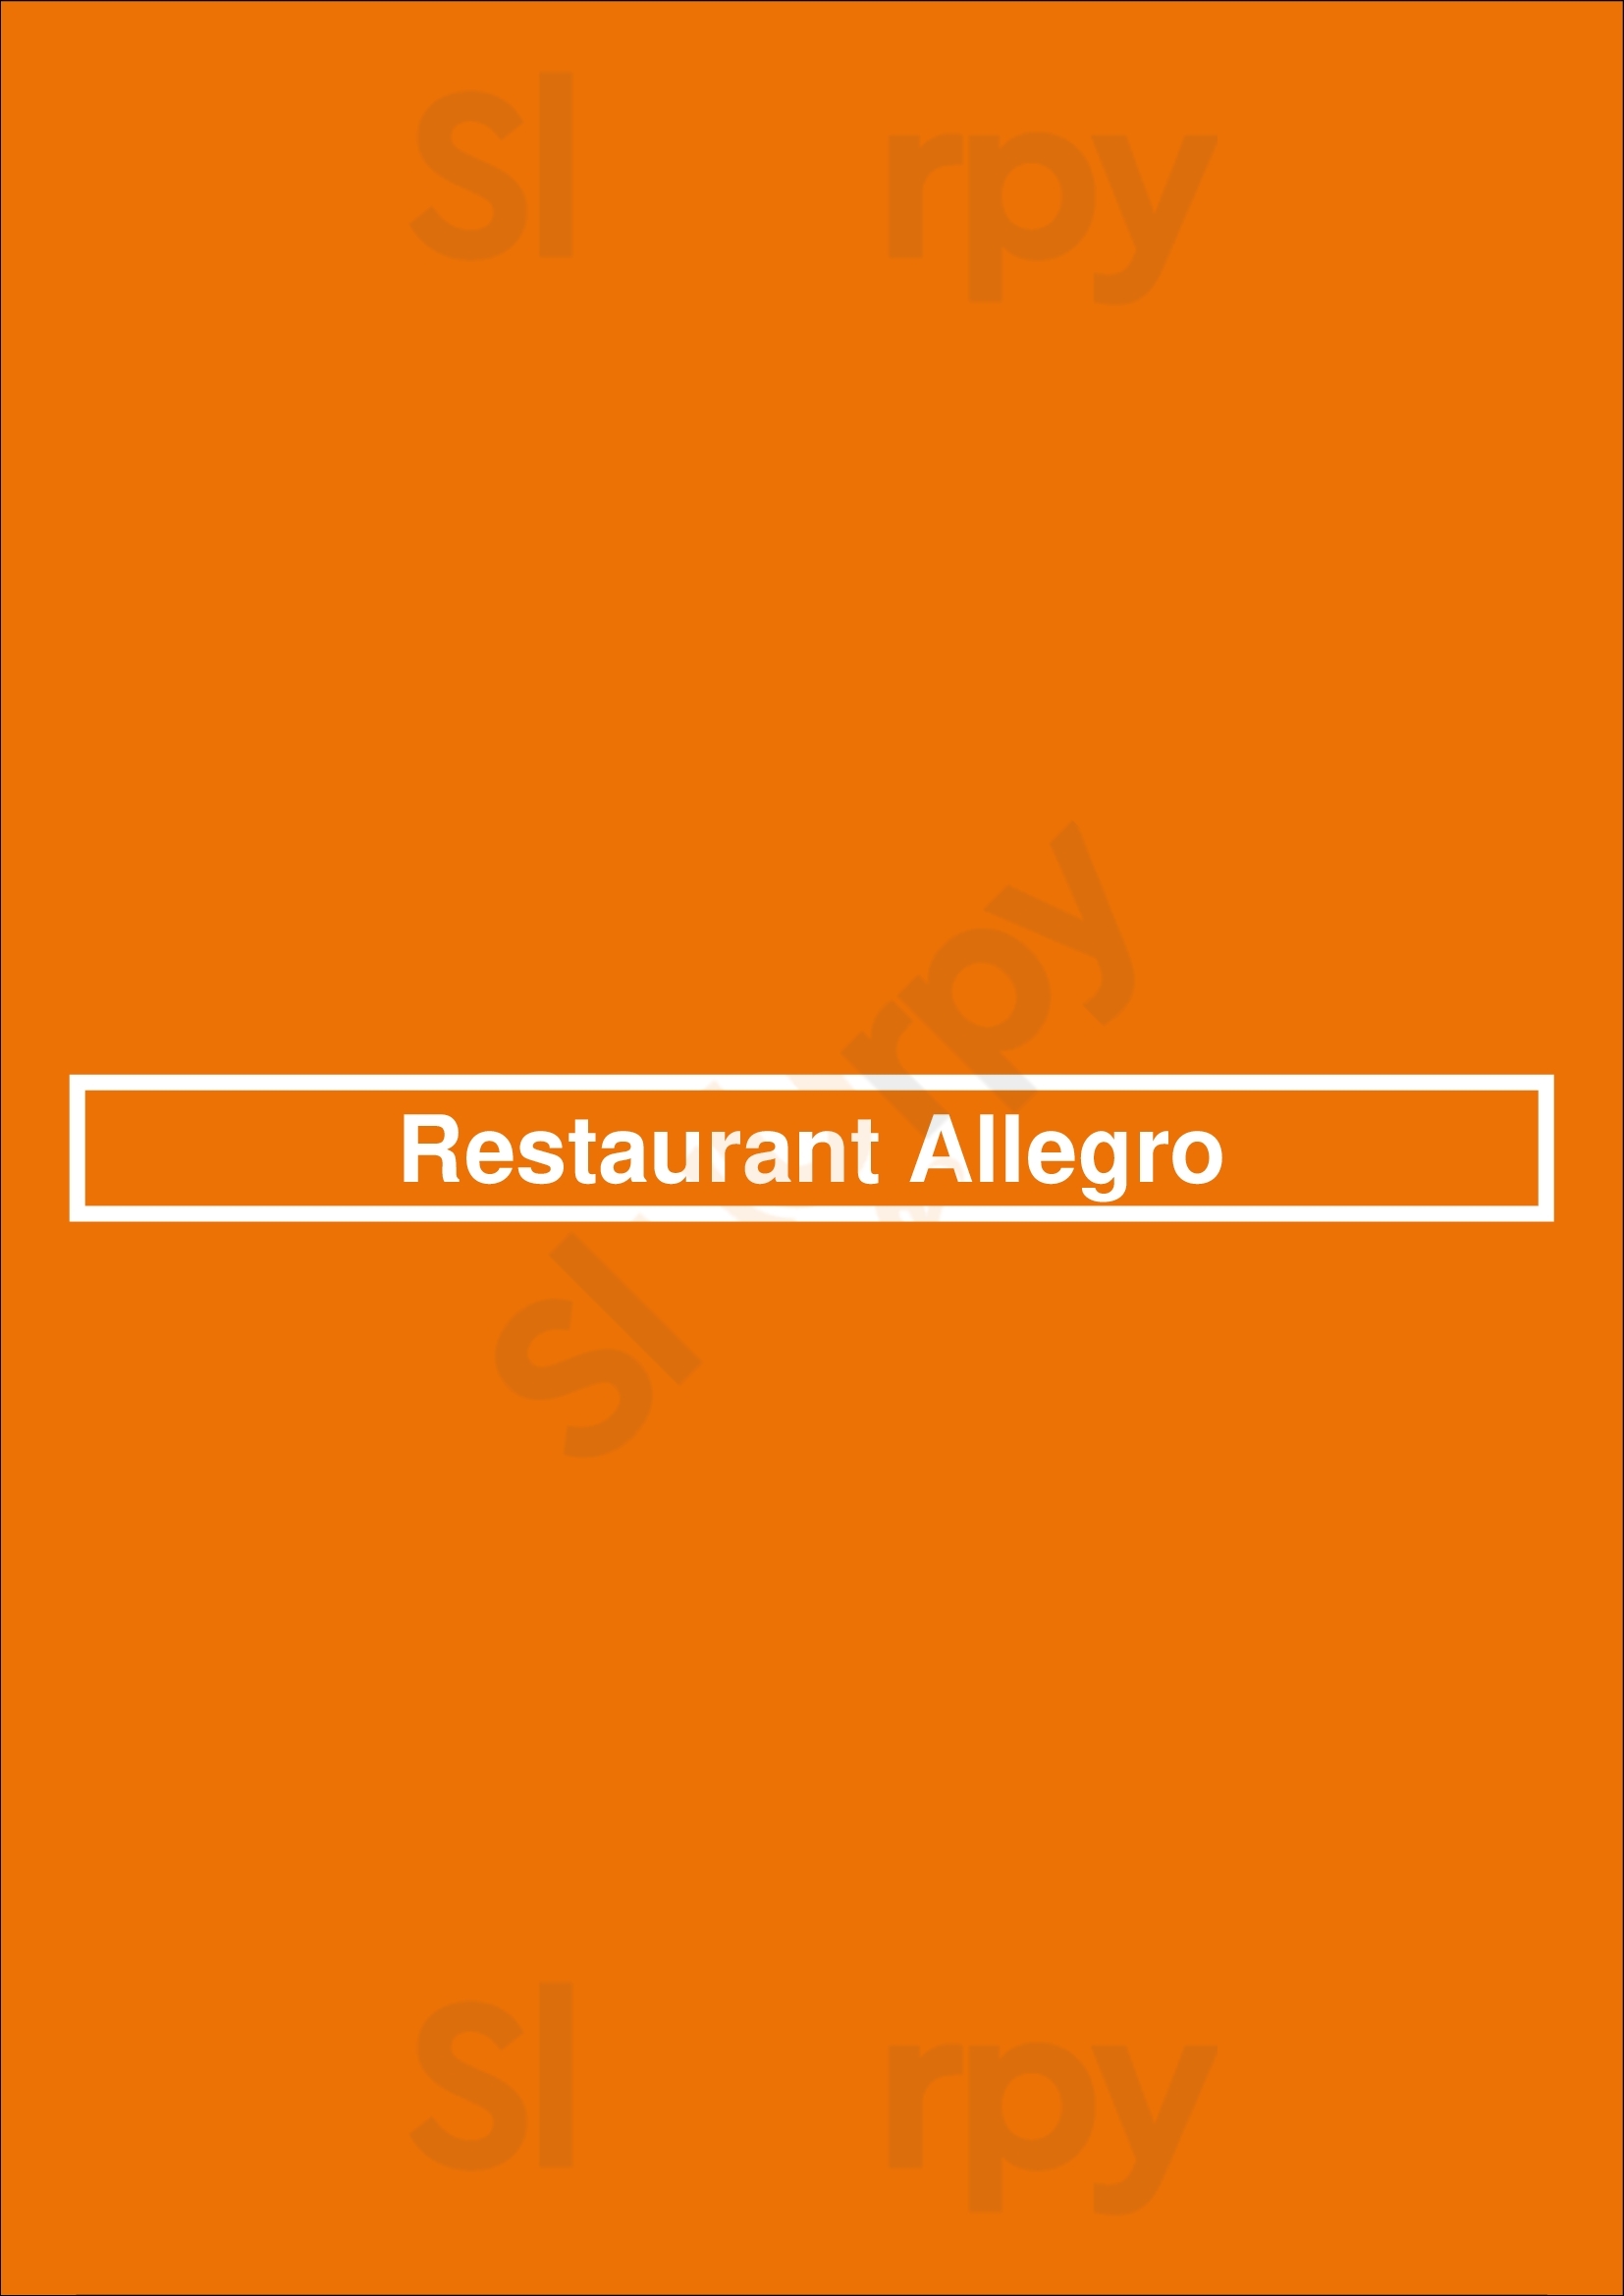 Restaurant Allegro Recklinghausen Menu - 1